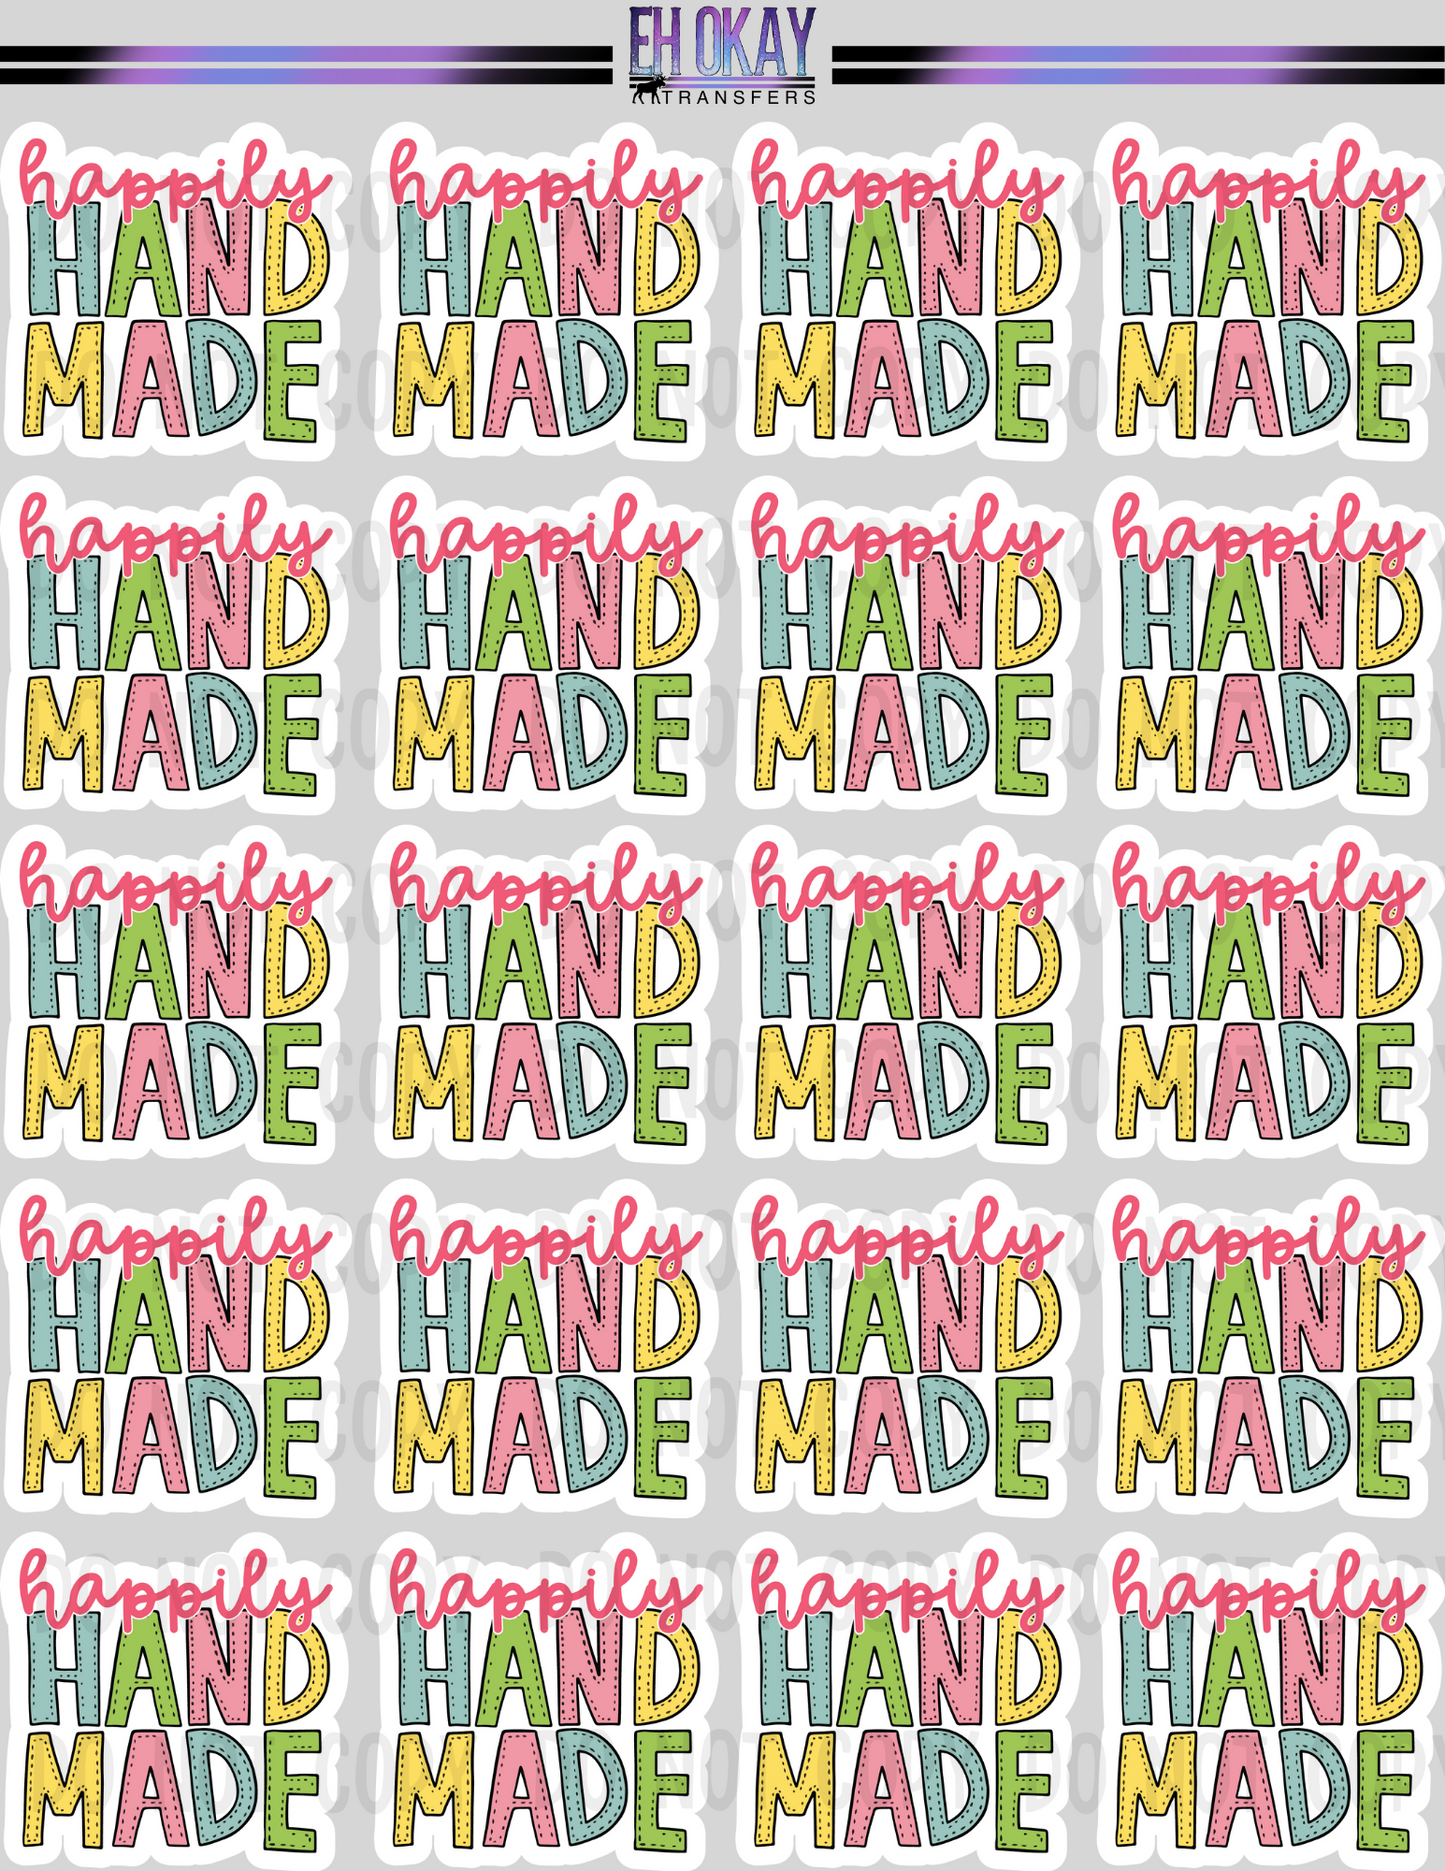 Handmade - Vinyl sticker sheet